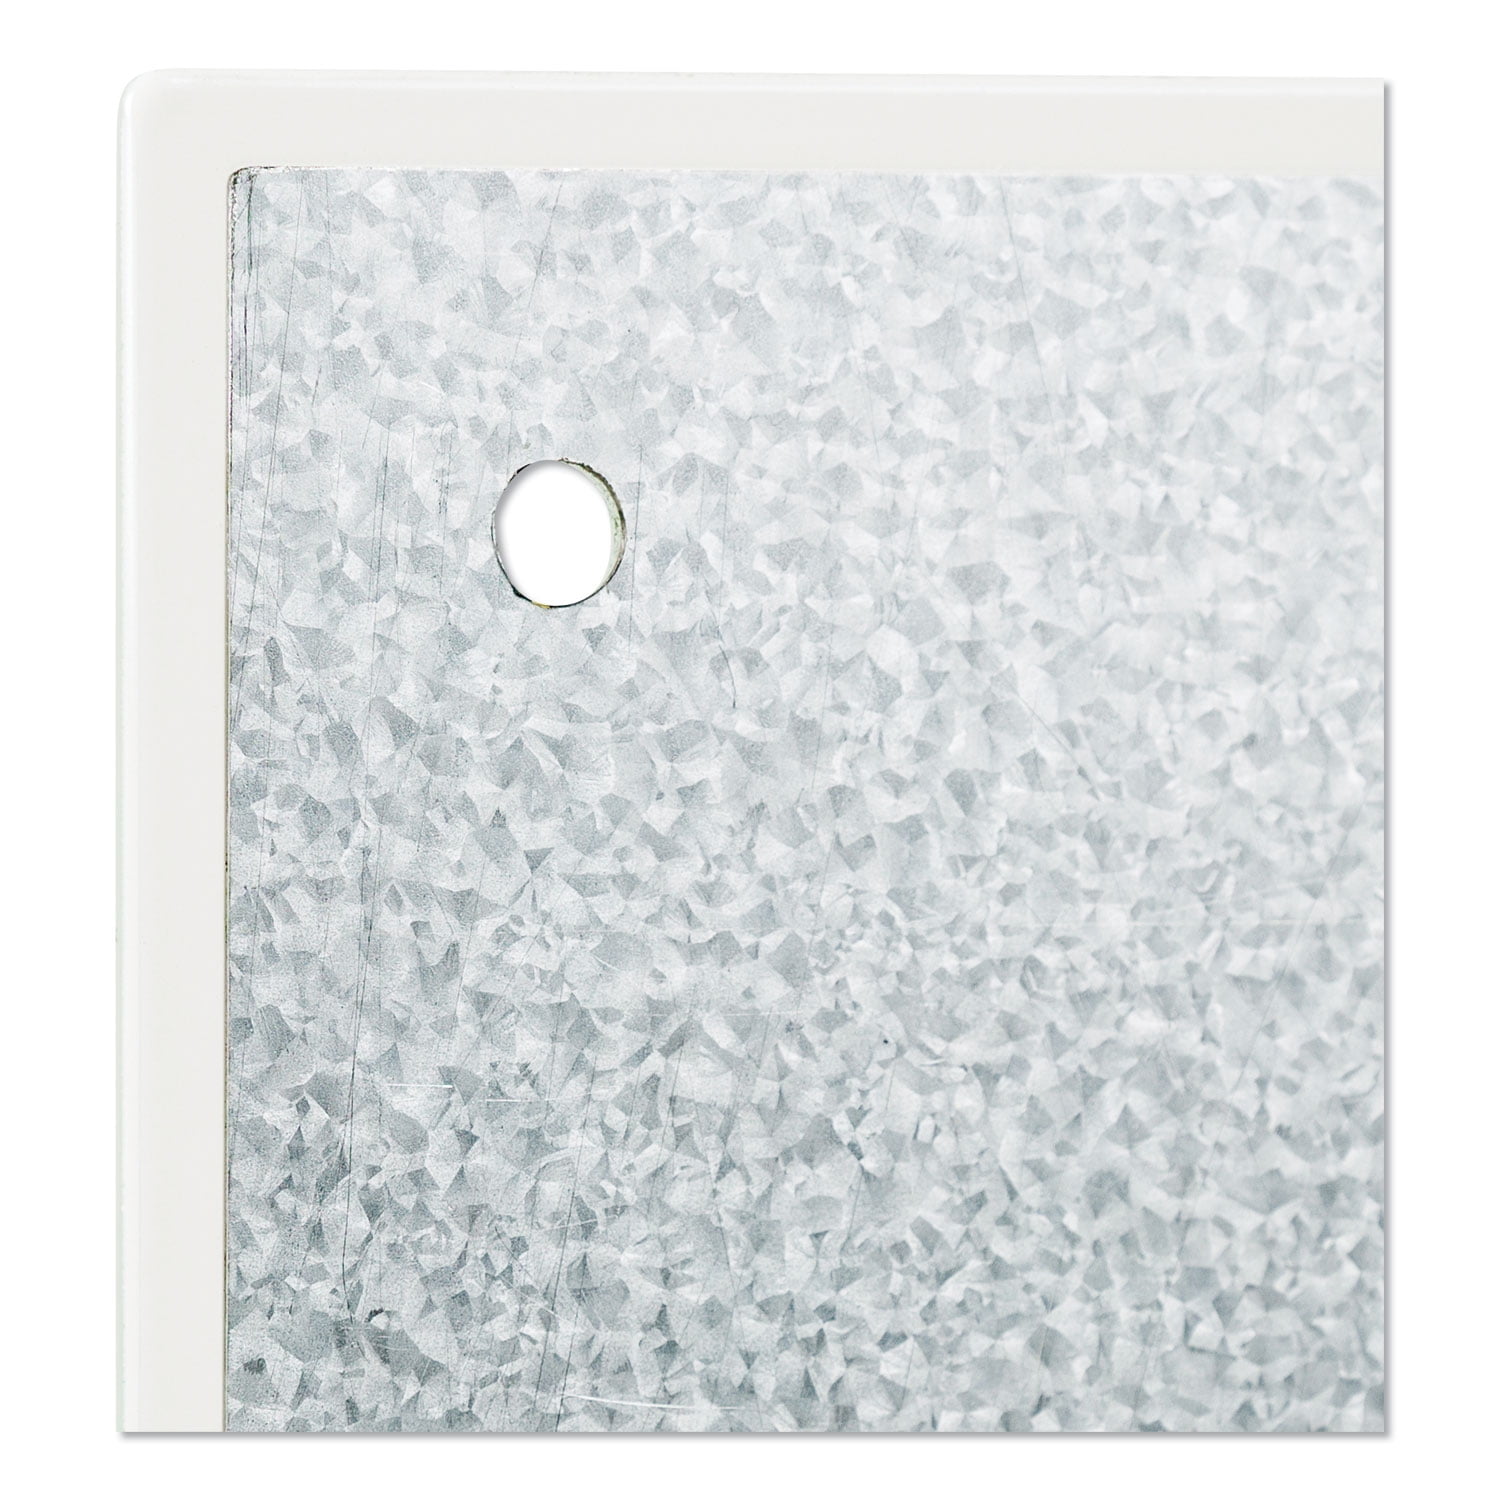 Global Industrial™ Magnetic Glass Dry Erase Board - 72 x 48 - Black